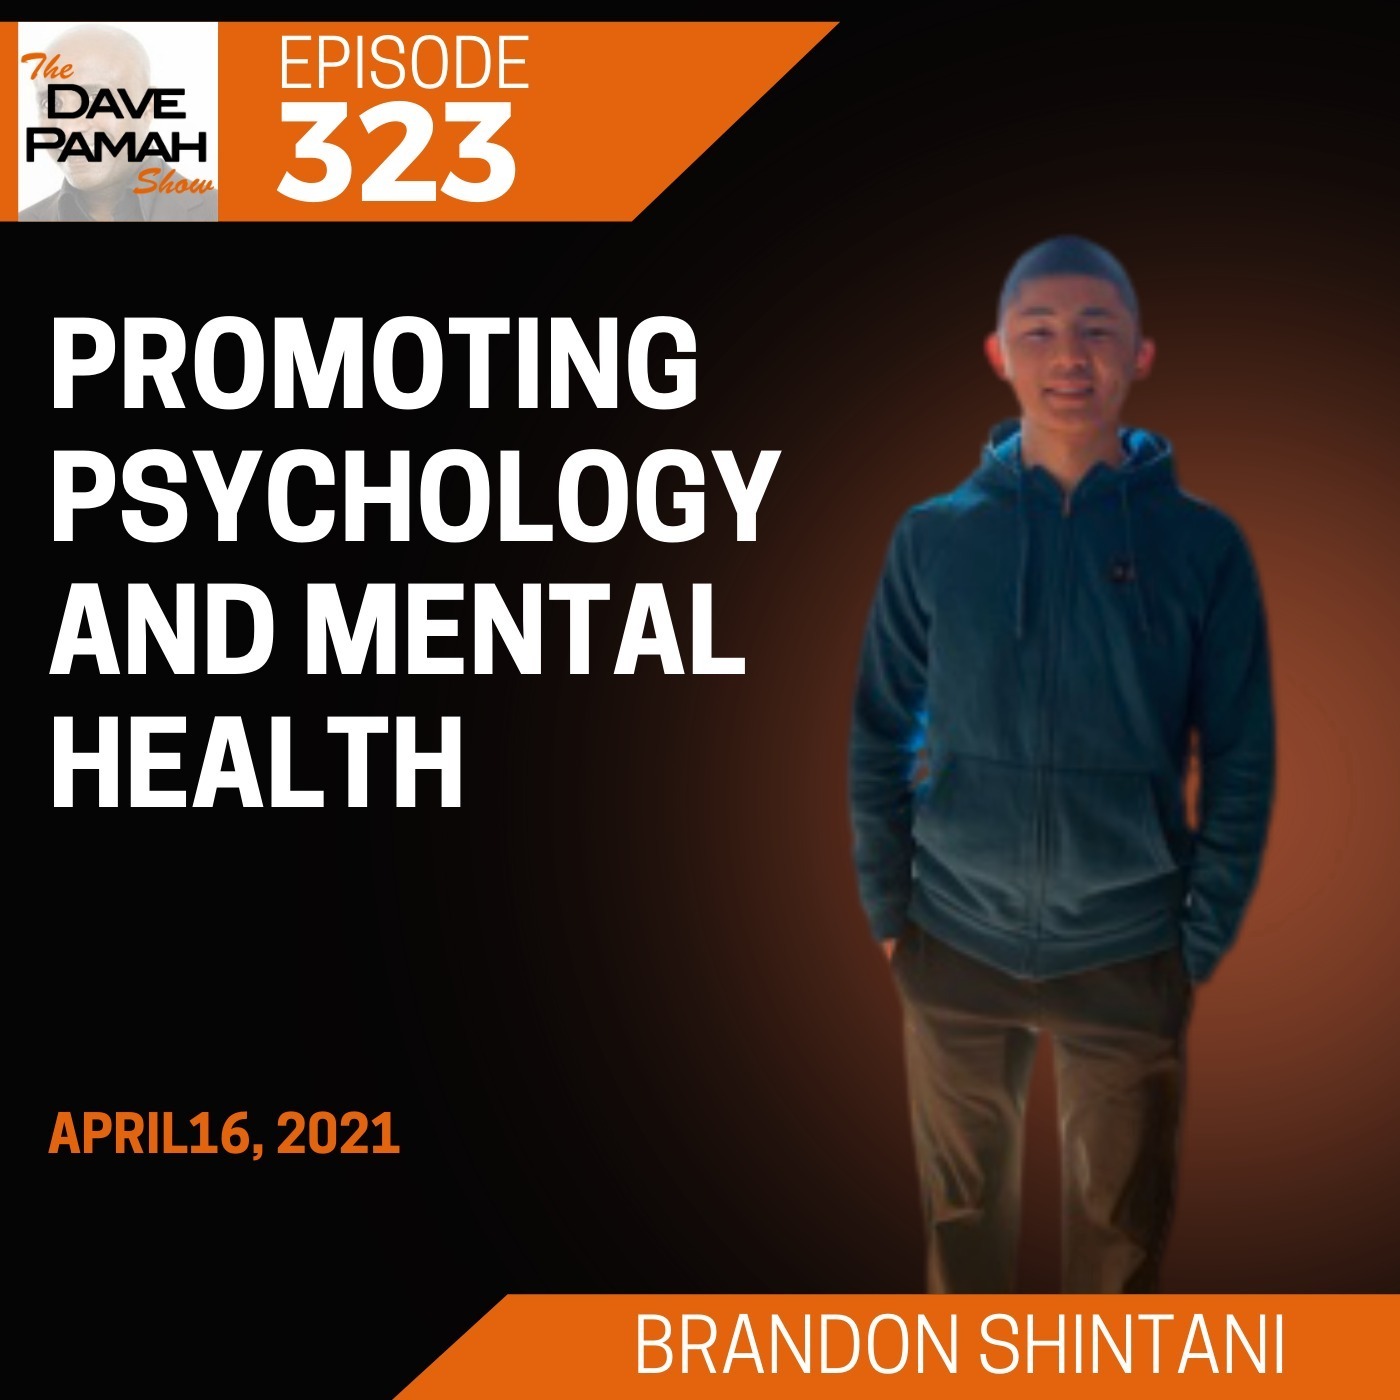 Promoting psychology and mental health with Brandon Shintani